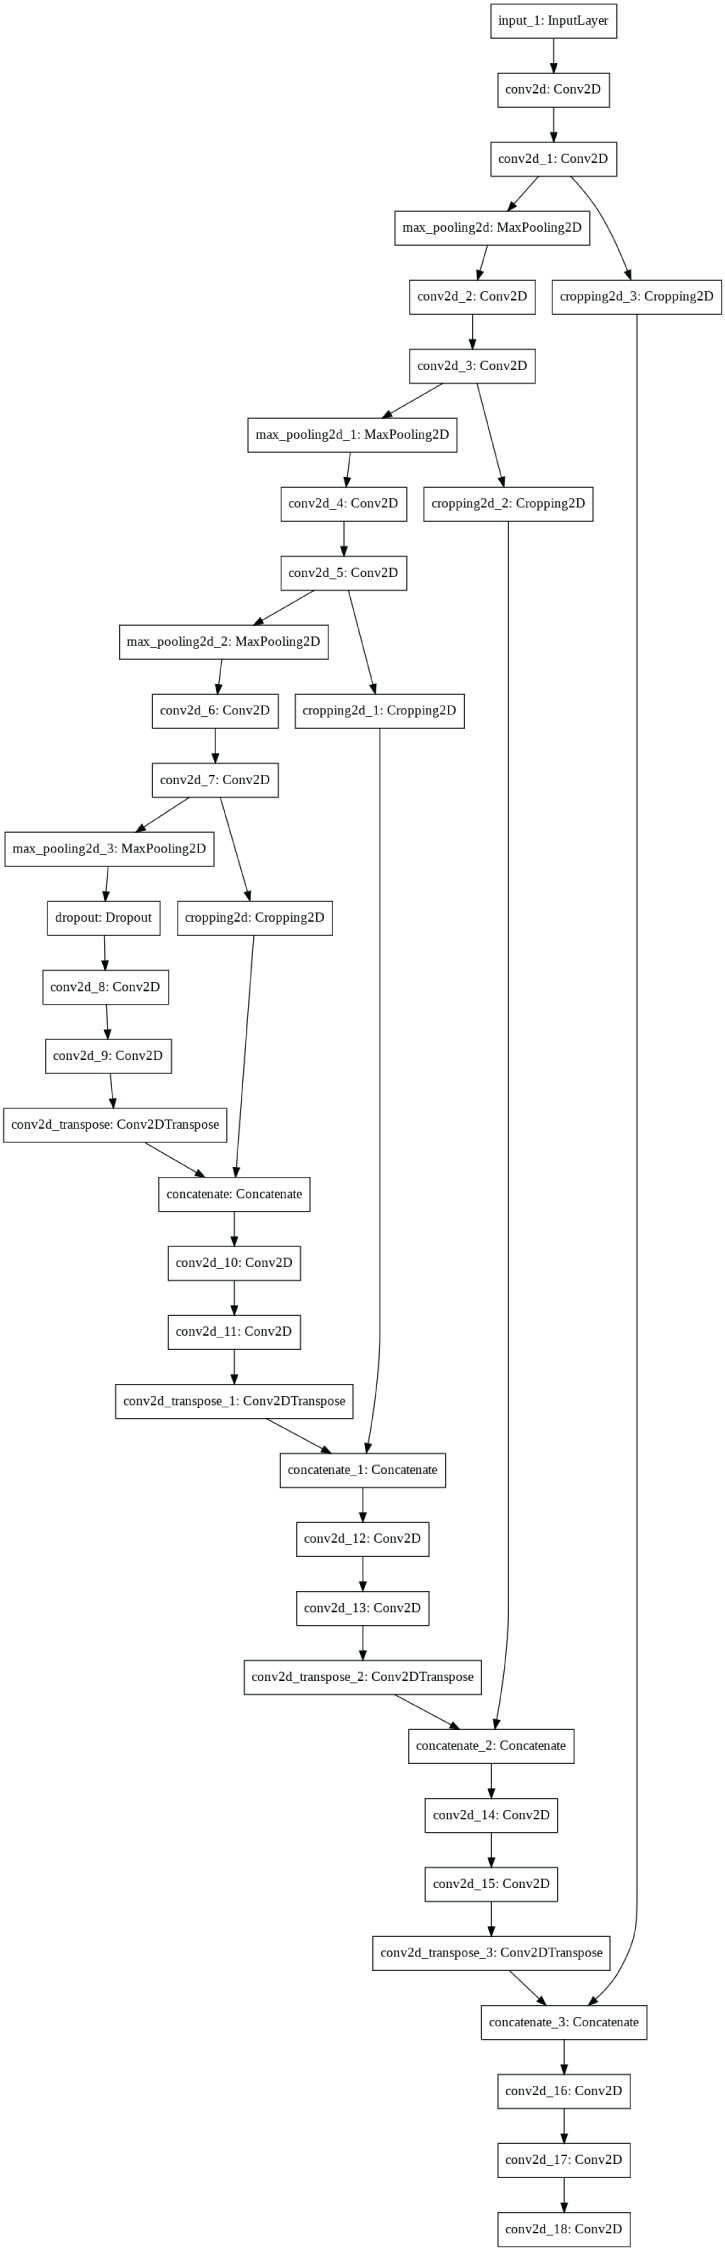 Snapshot of the plot of vanilla U-Net model